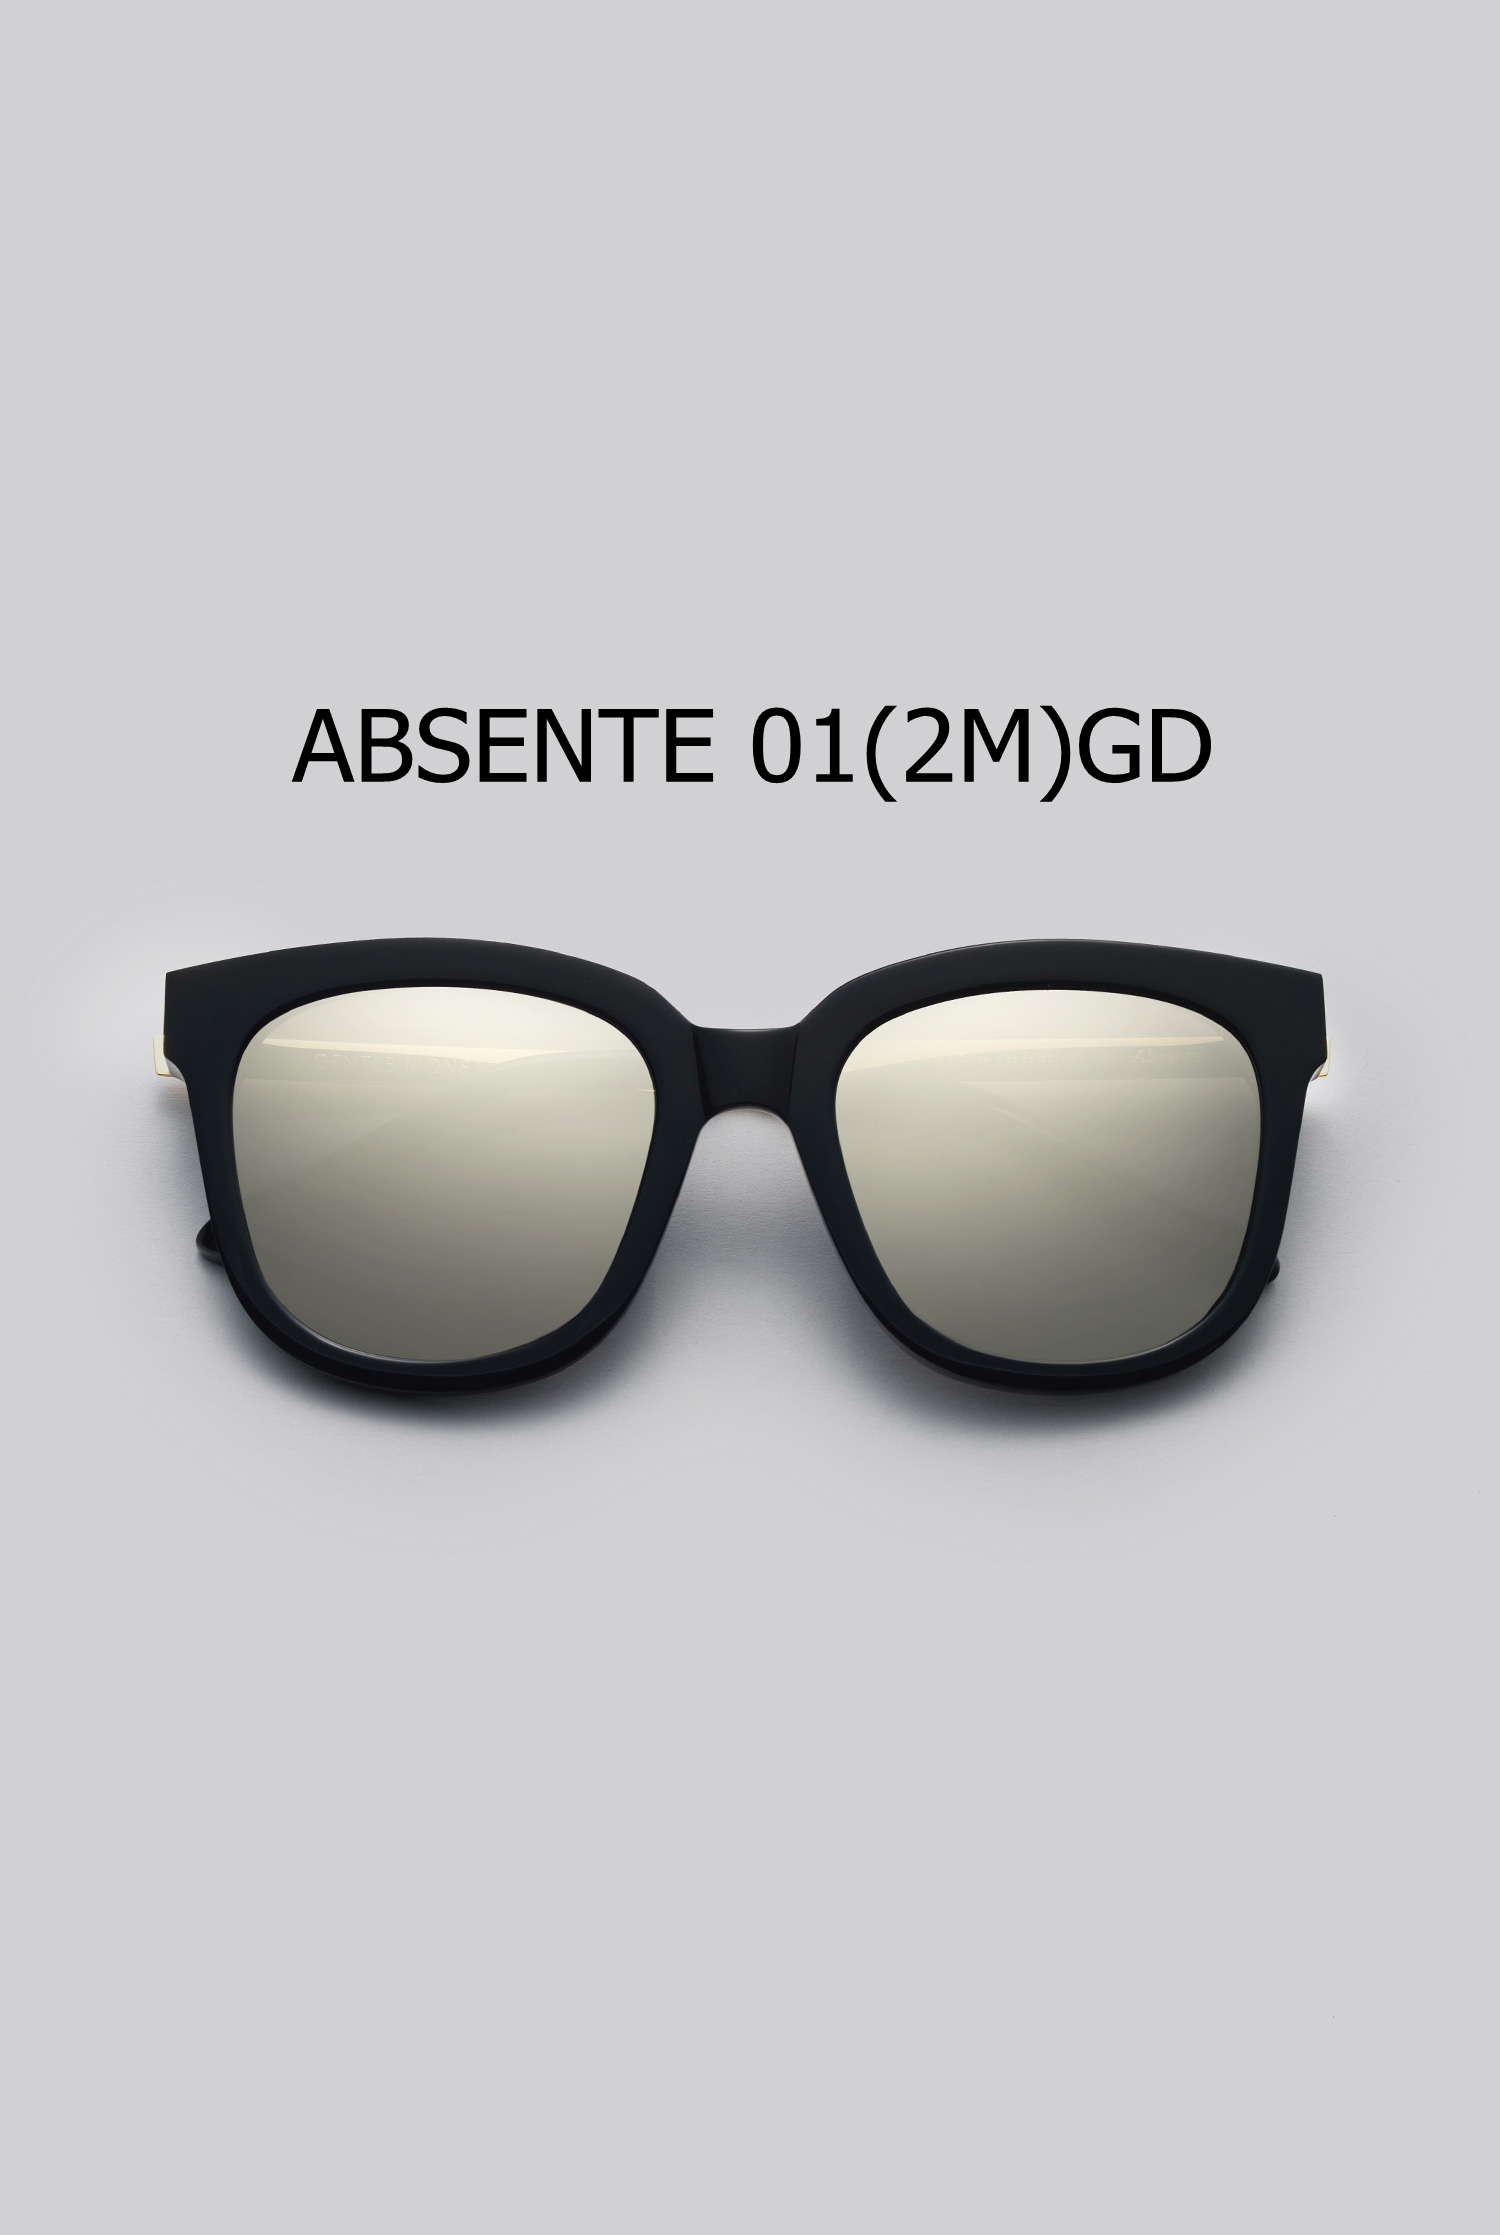 ABSENTE 01(2M)GD 